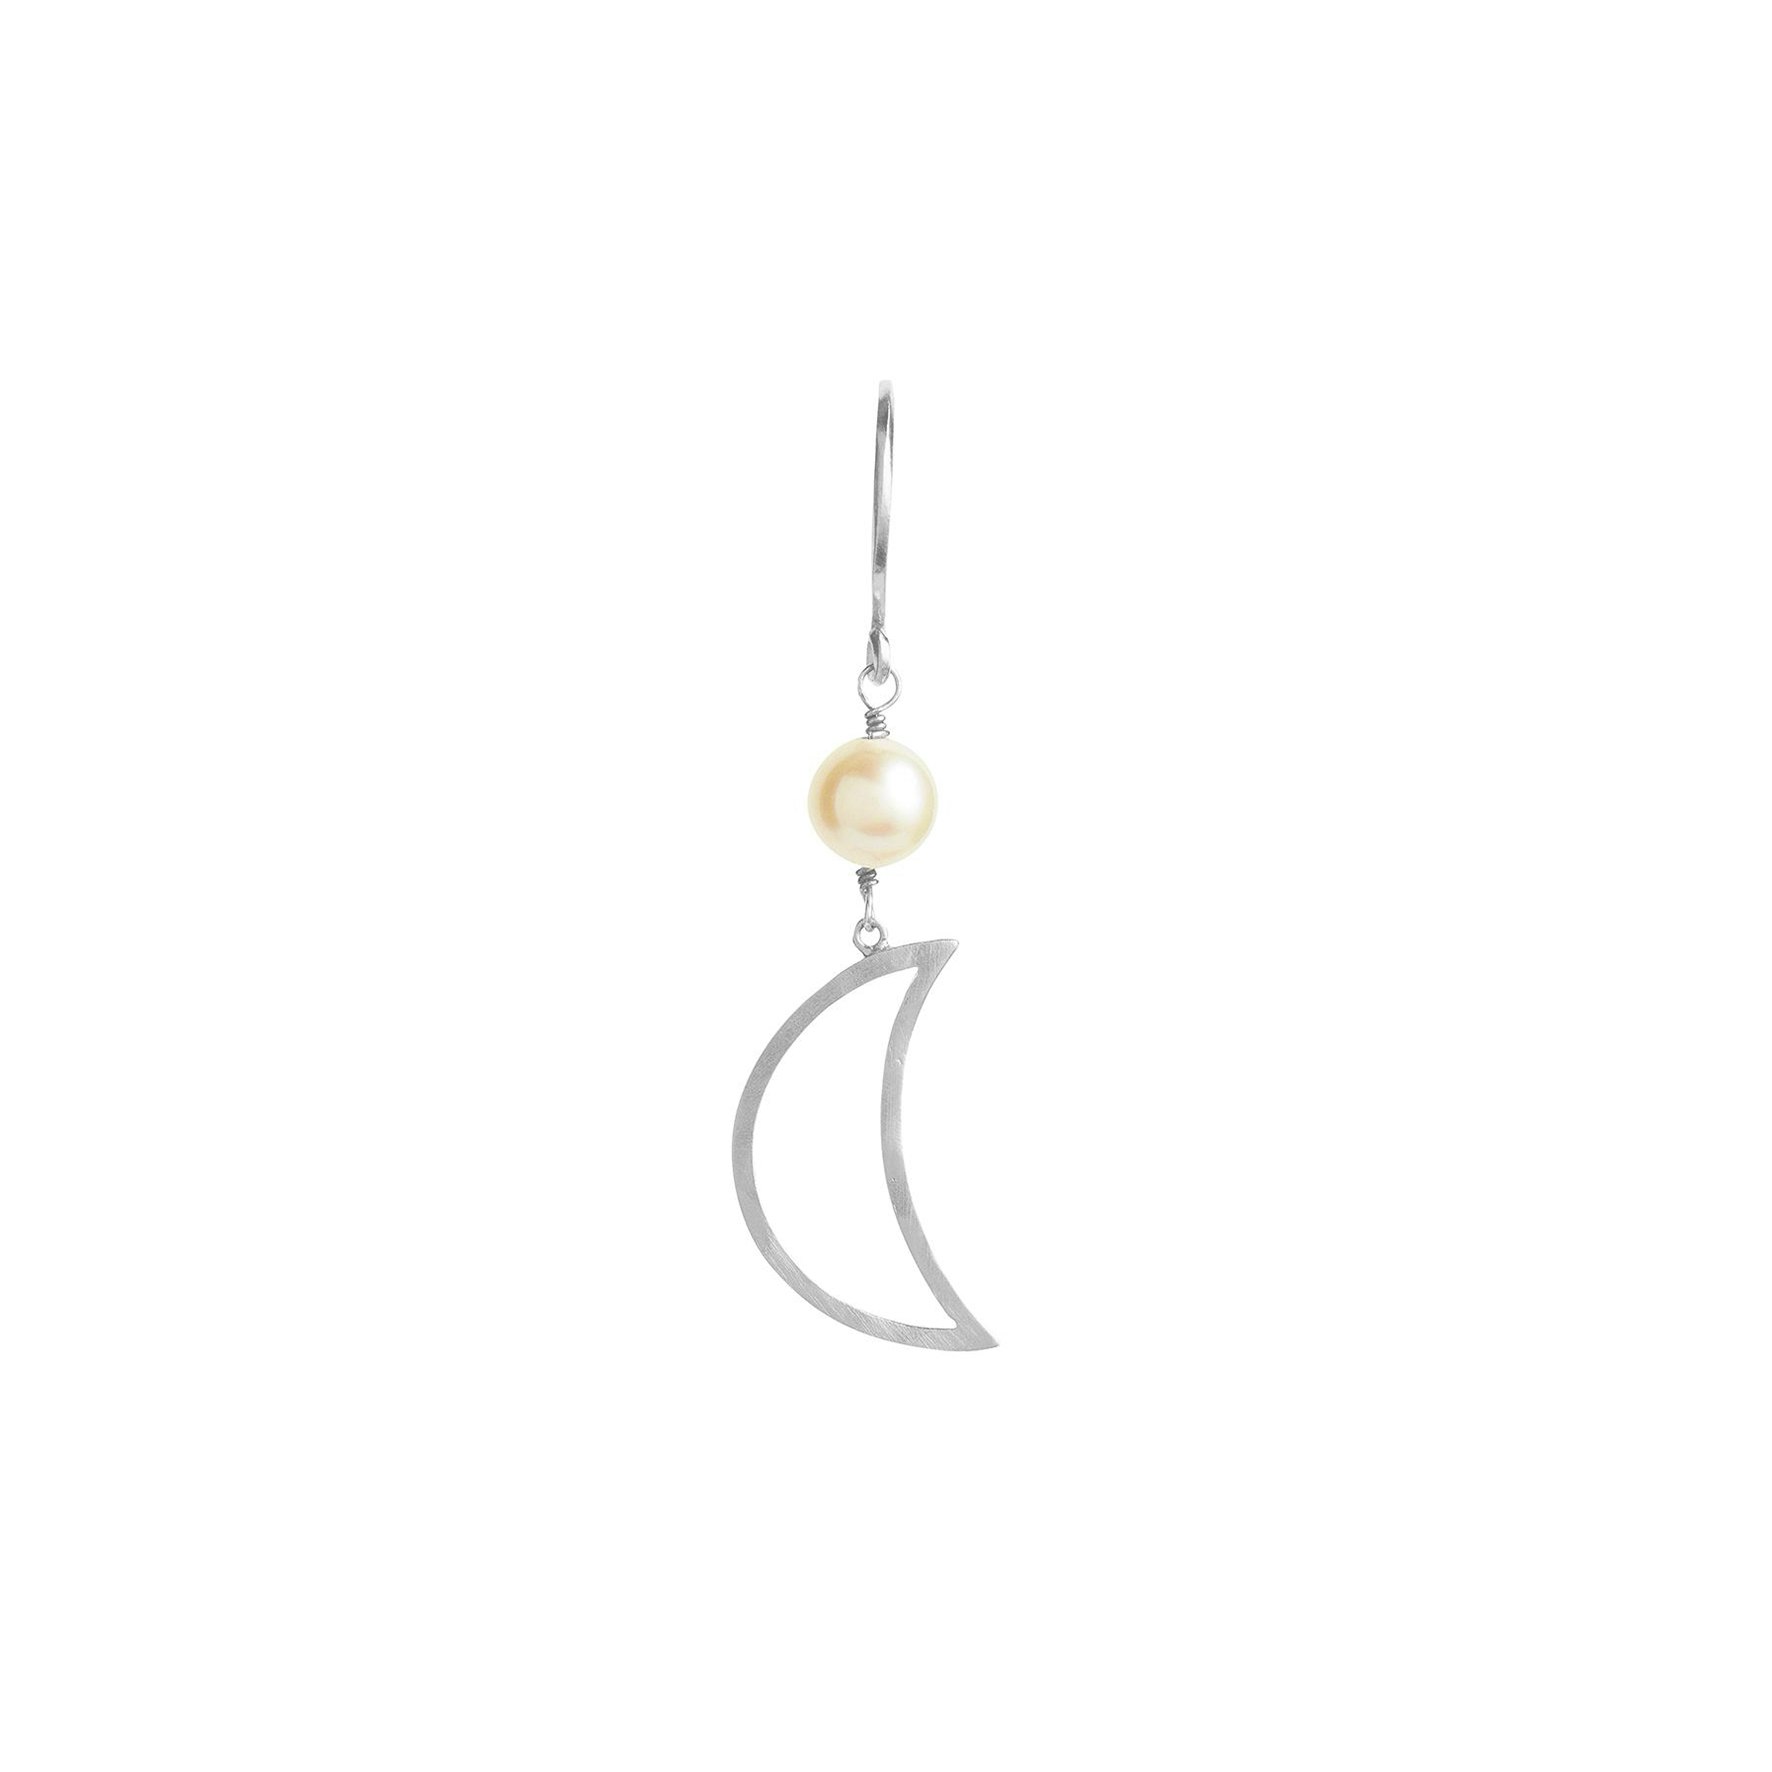 Bella Moon Earring With Pearl van STINE A Jewelry in Zilver Sterling 925